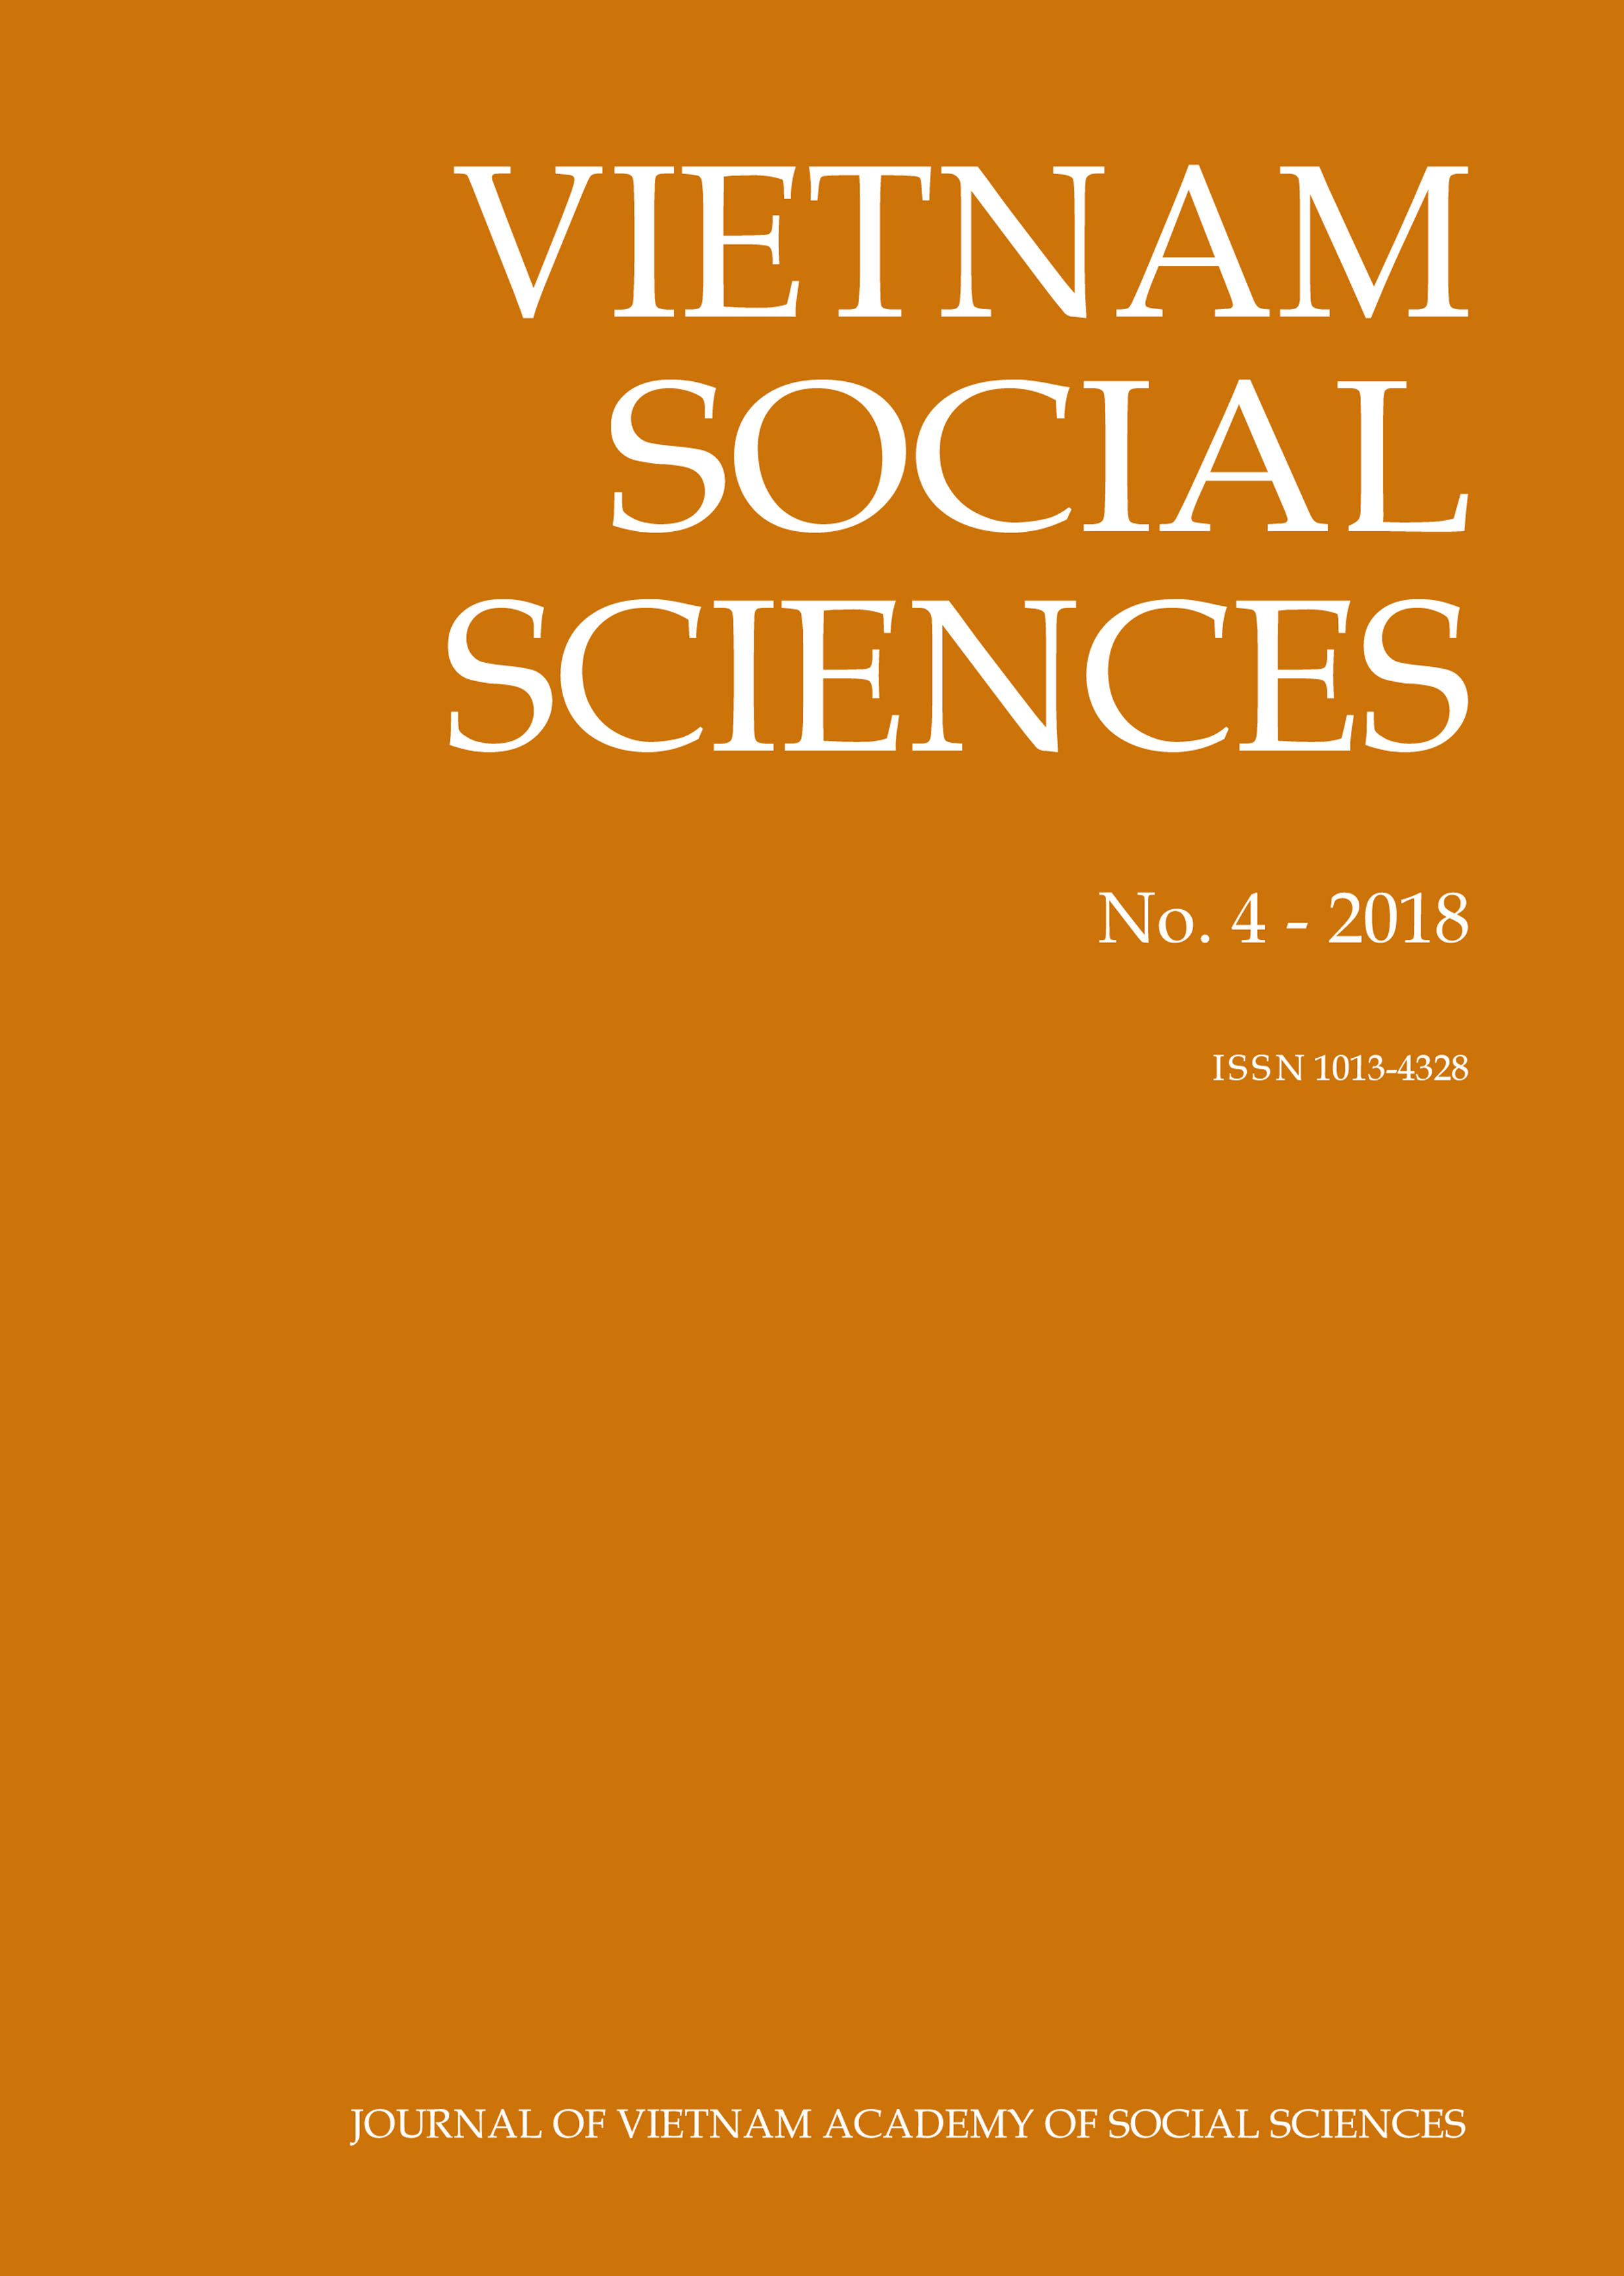 Vietnam Social Sciences. No. 4 - 2018